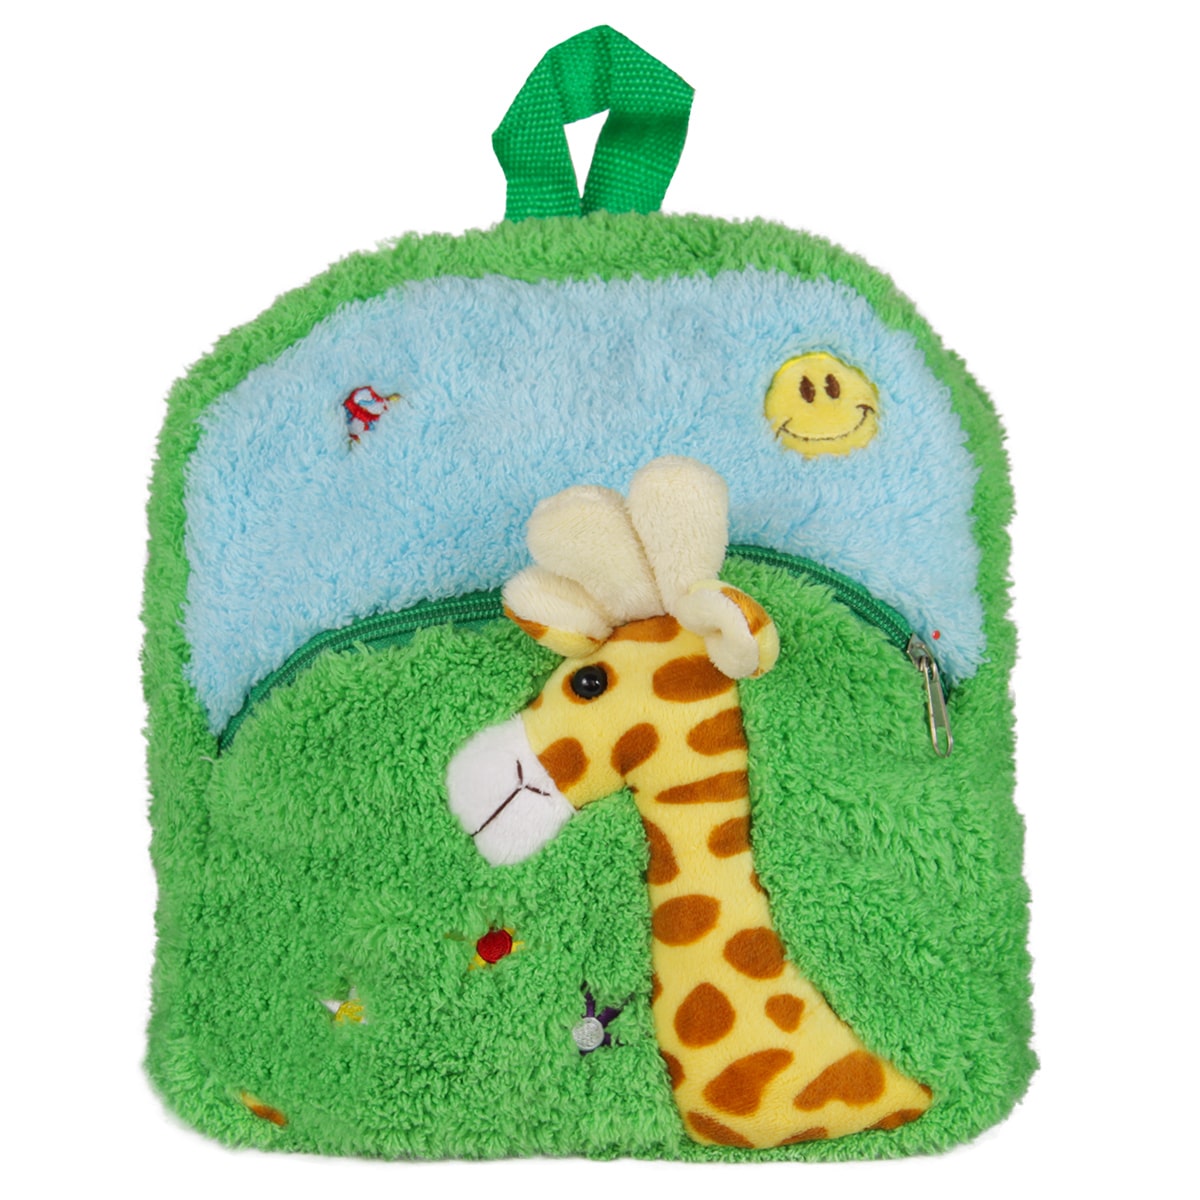 Backpack with giraffe